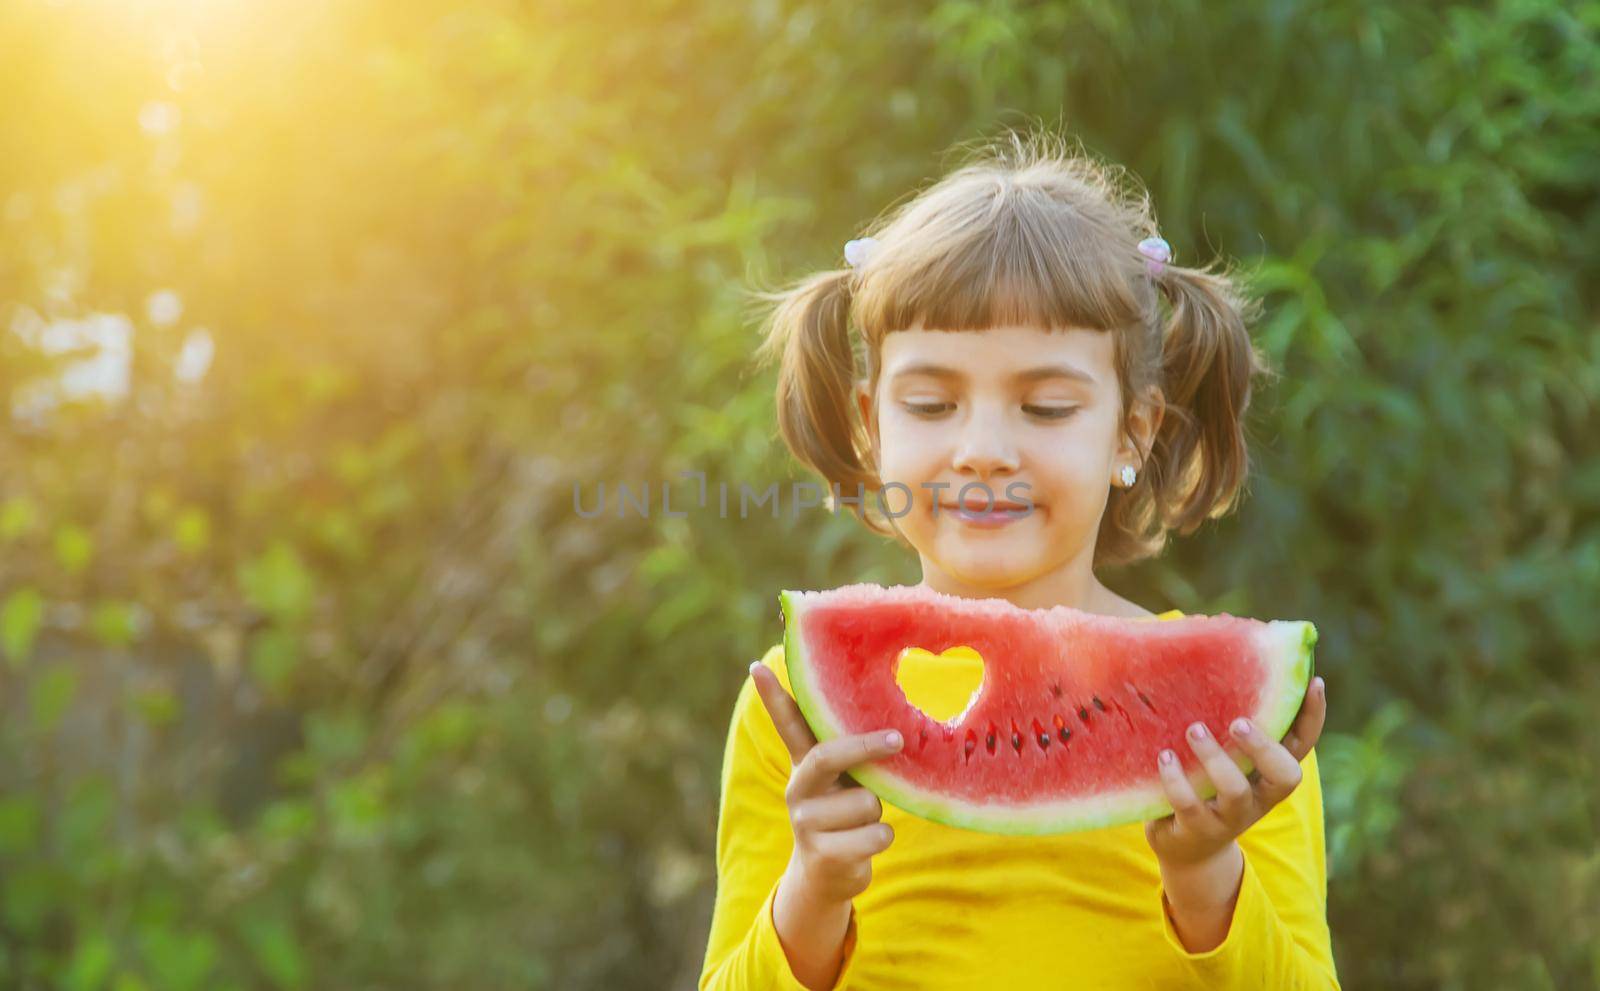 child eats a watermelon in the garden. Selective focus. by yanadjana